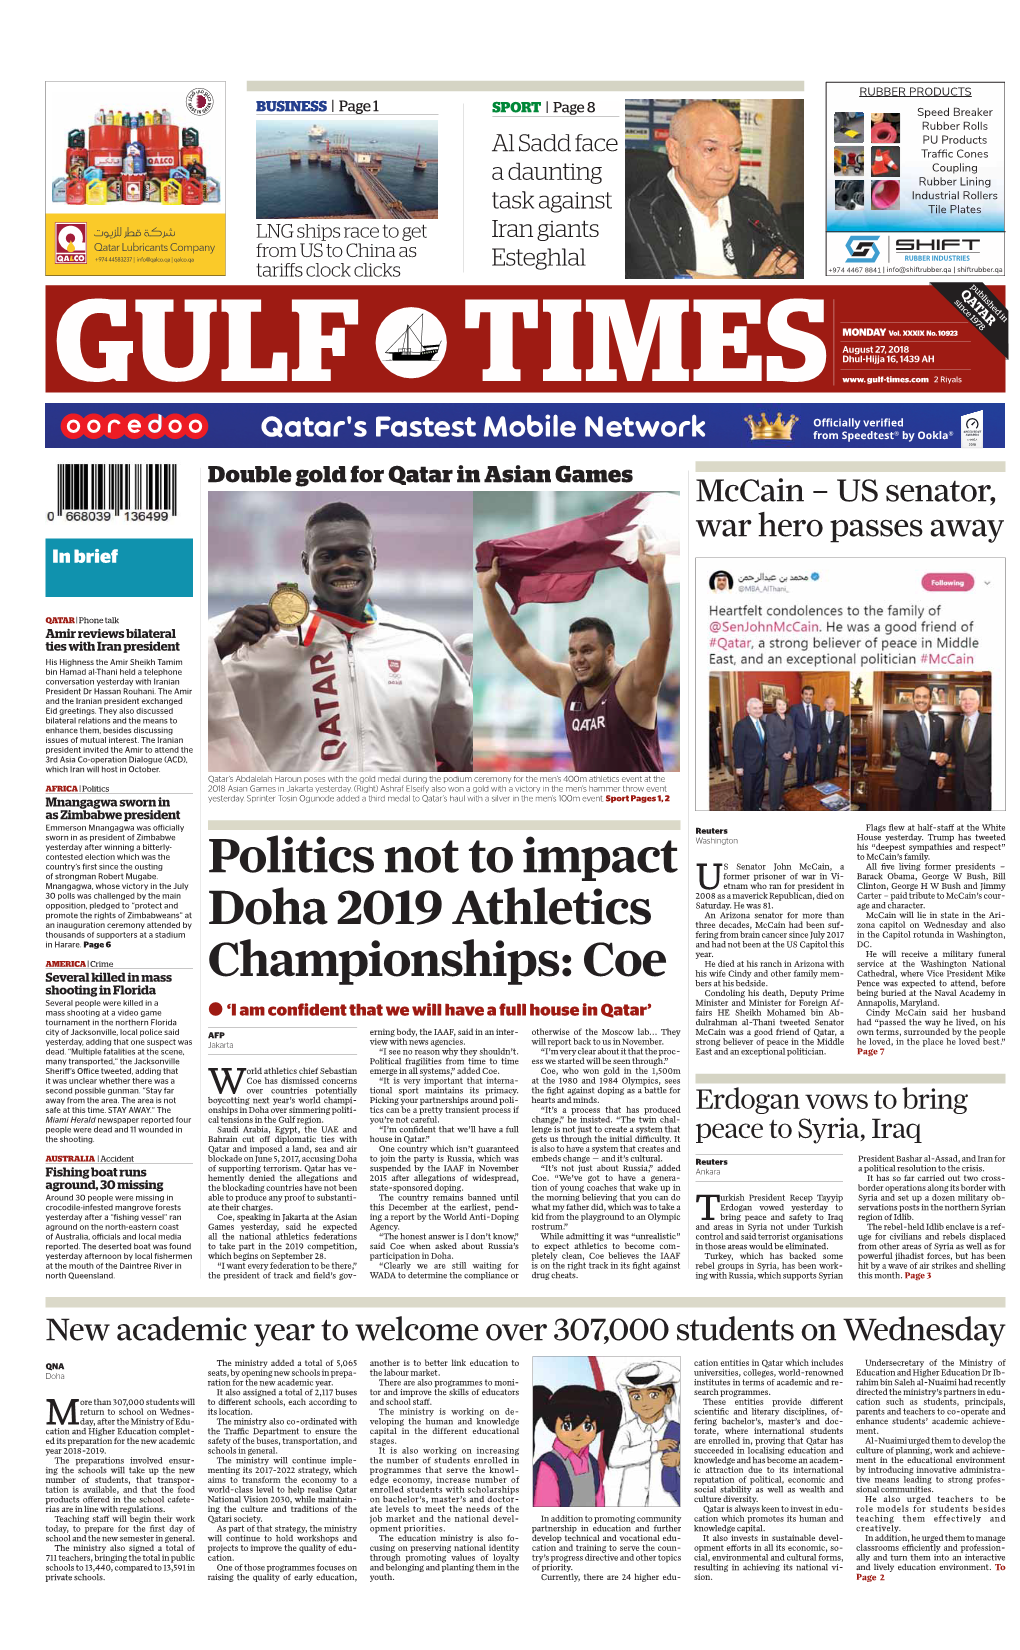 Politics Not to Impact Doha 2019 Athletics Championships